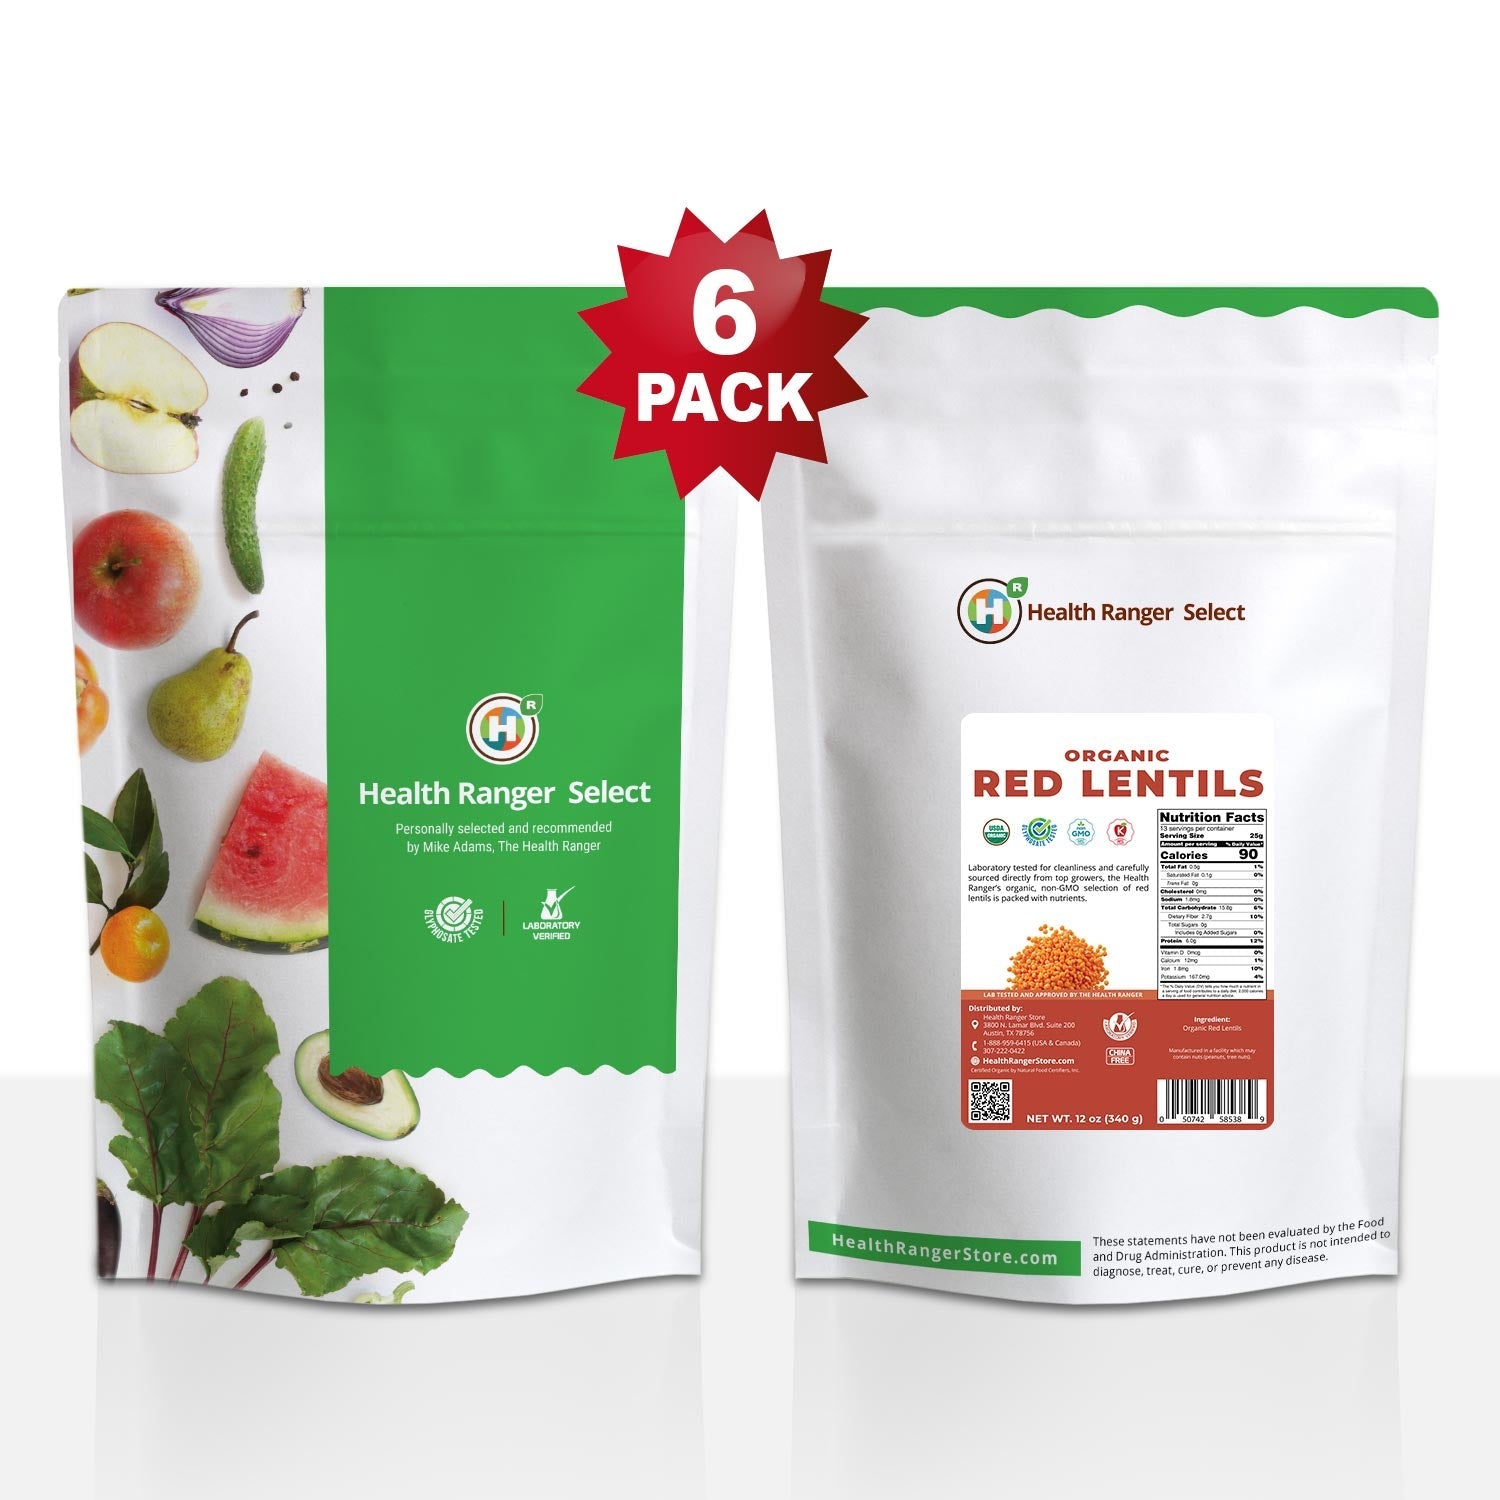 Organic Red Lentils 12 oz (340g) (6-Pack)